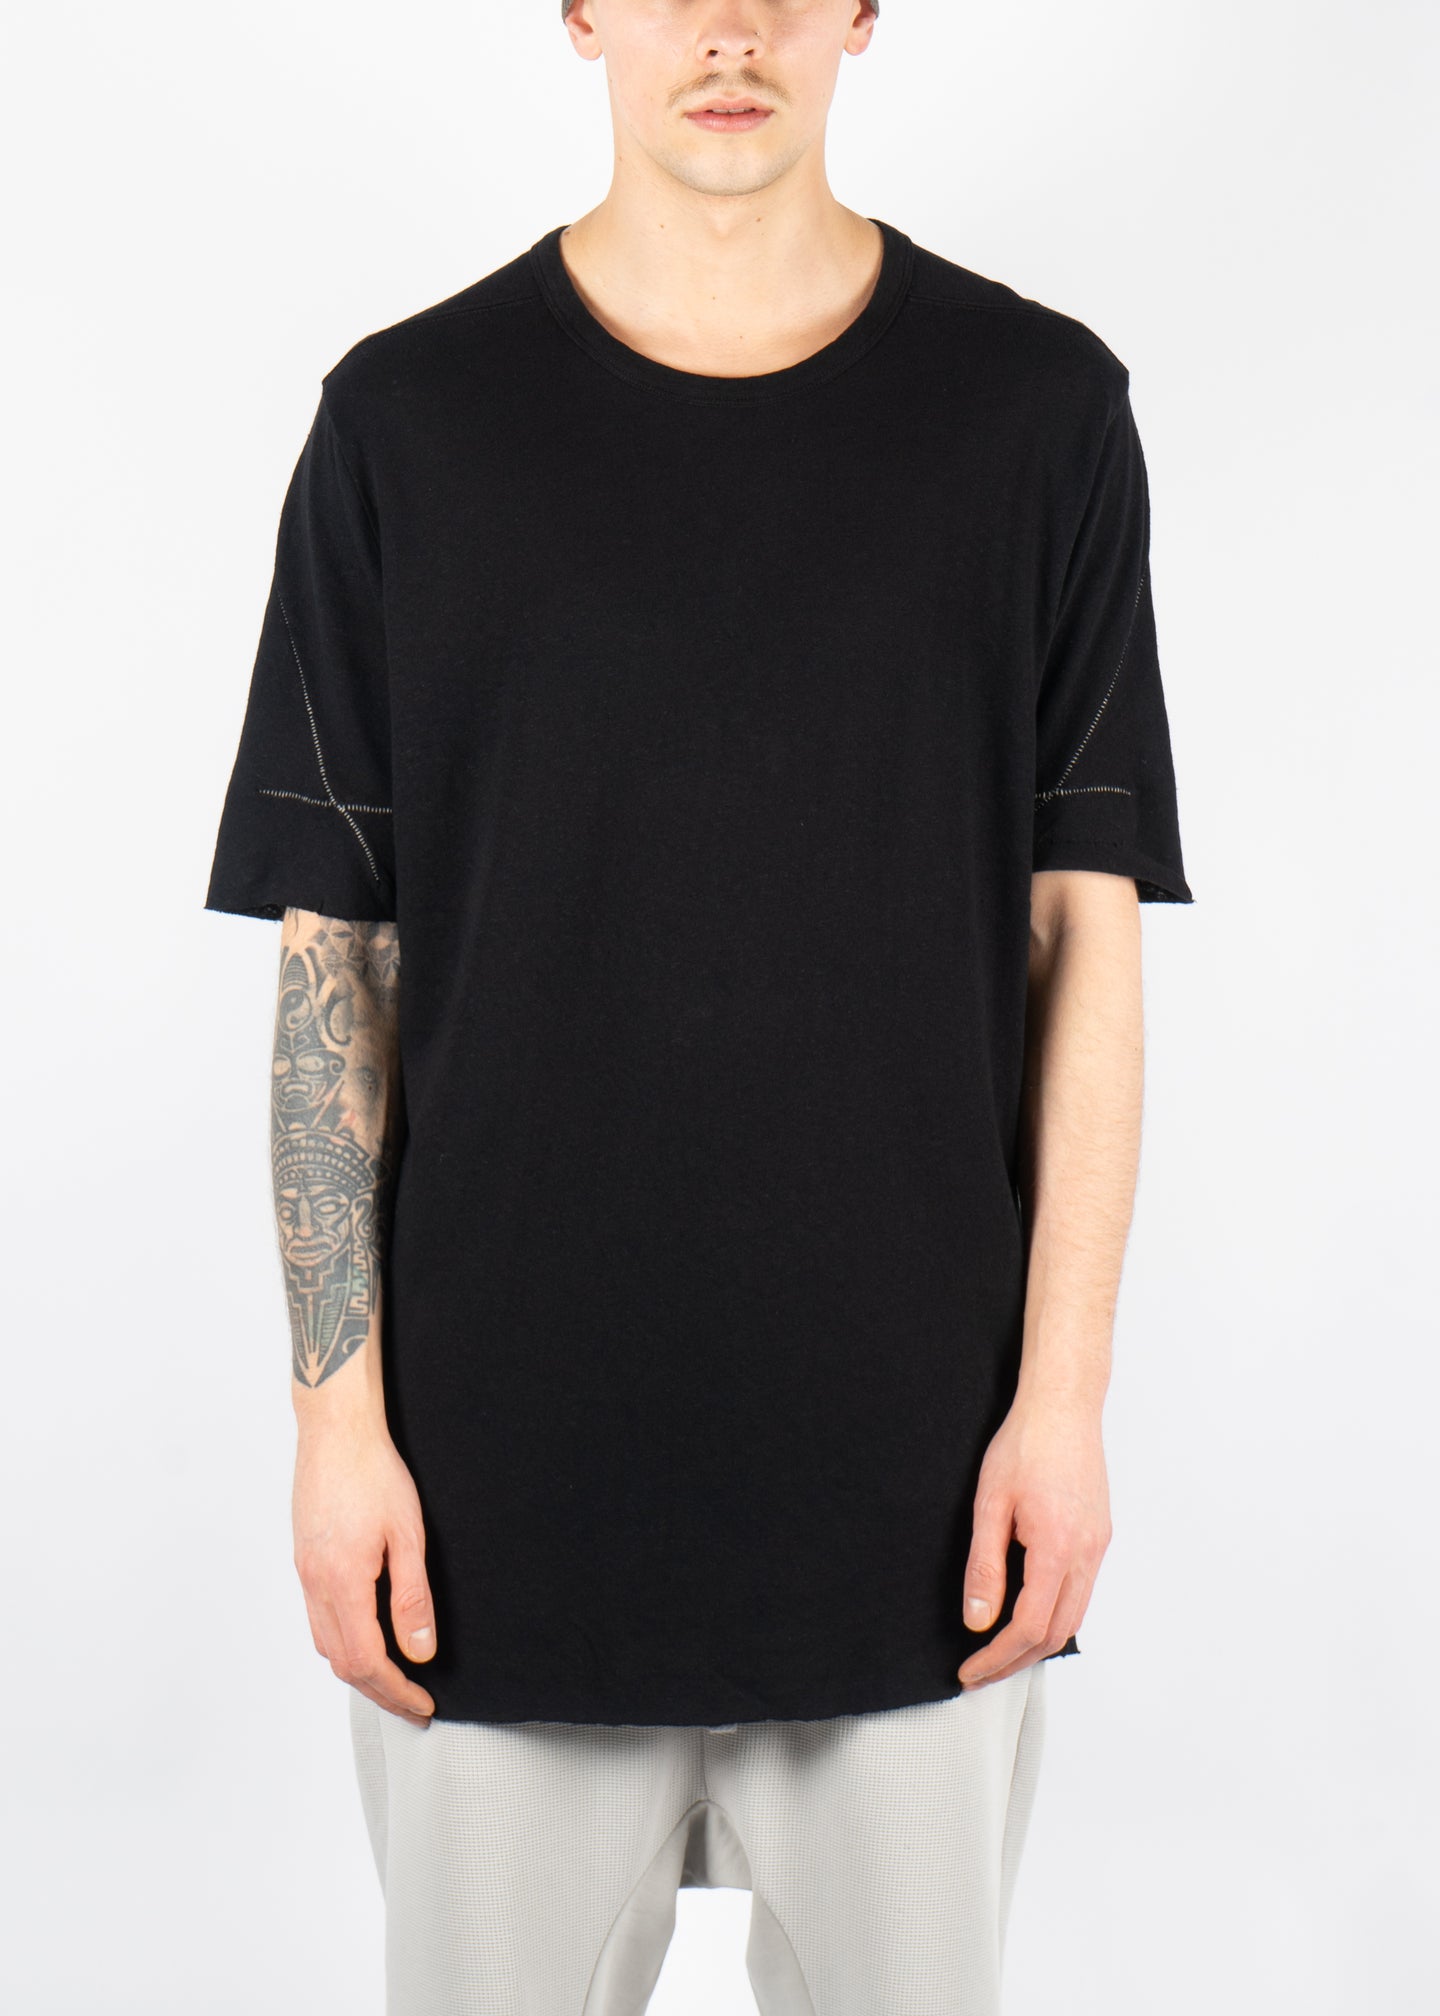 M TS 779 T-Shirt Black